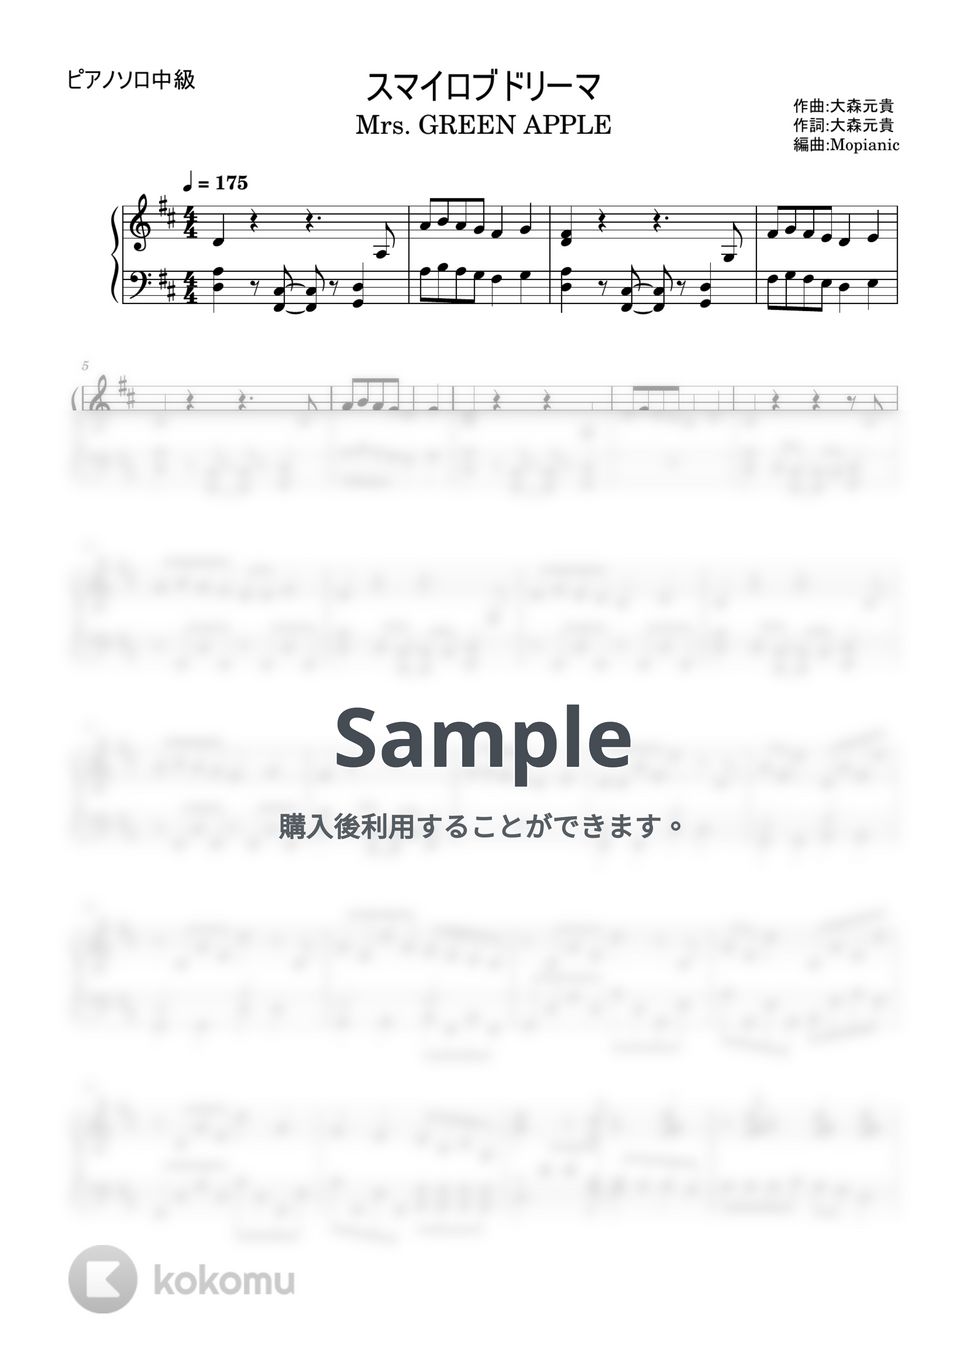 Mrs. GREEN APPLE - スマイロブドリーマ (intermediate, piano) by Mopianic